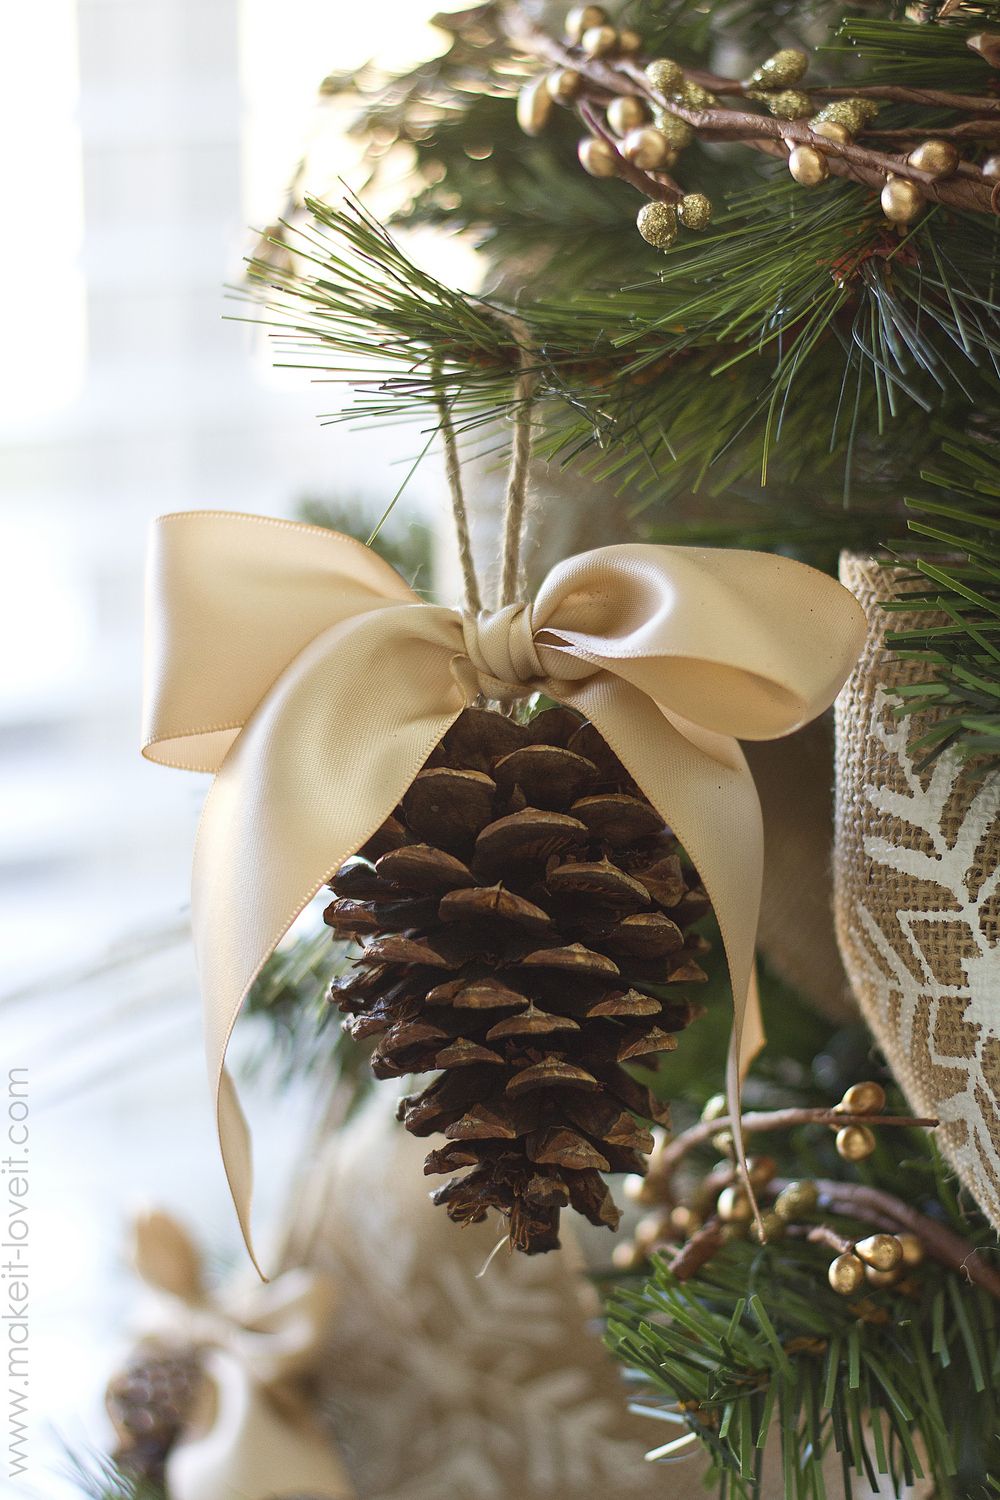 Supplies Gift Home Decor Ornaments Pine Cones Christmas Xmas Tree Decoration 